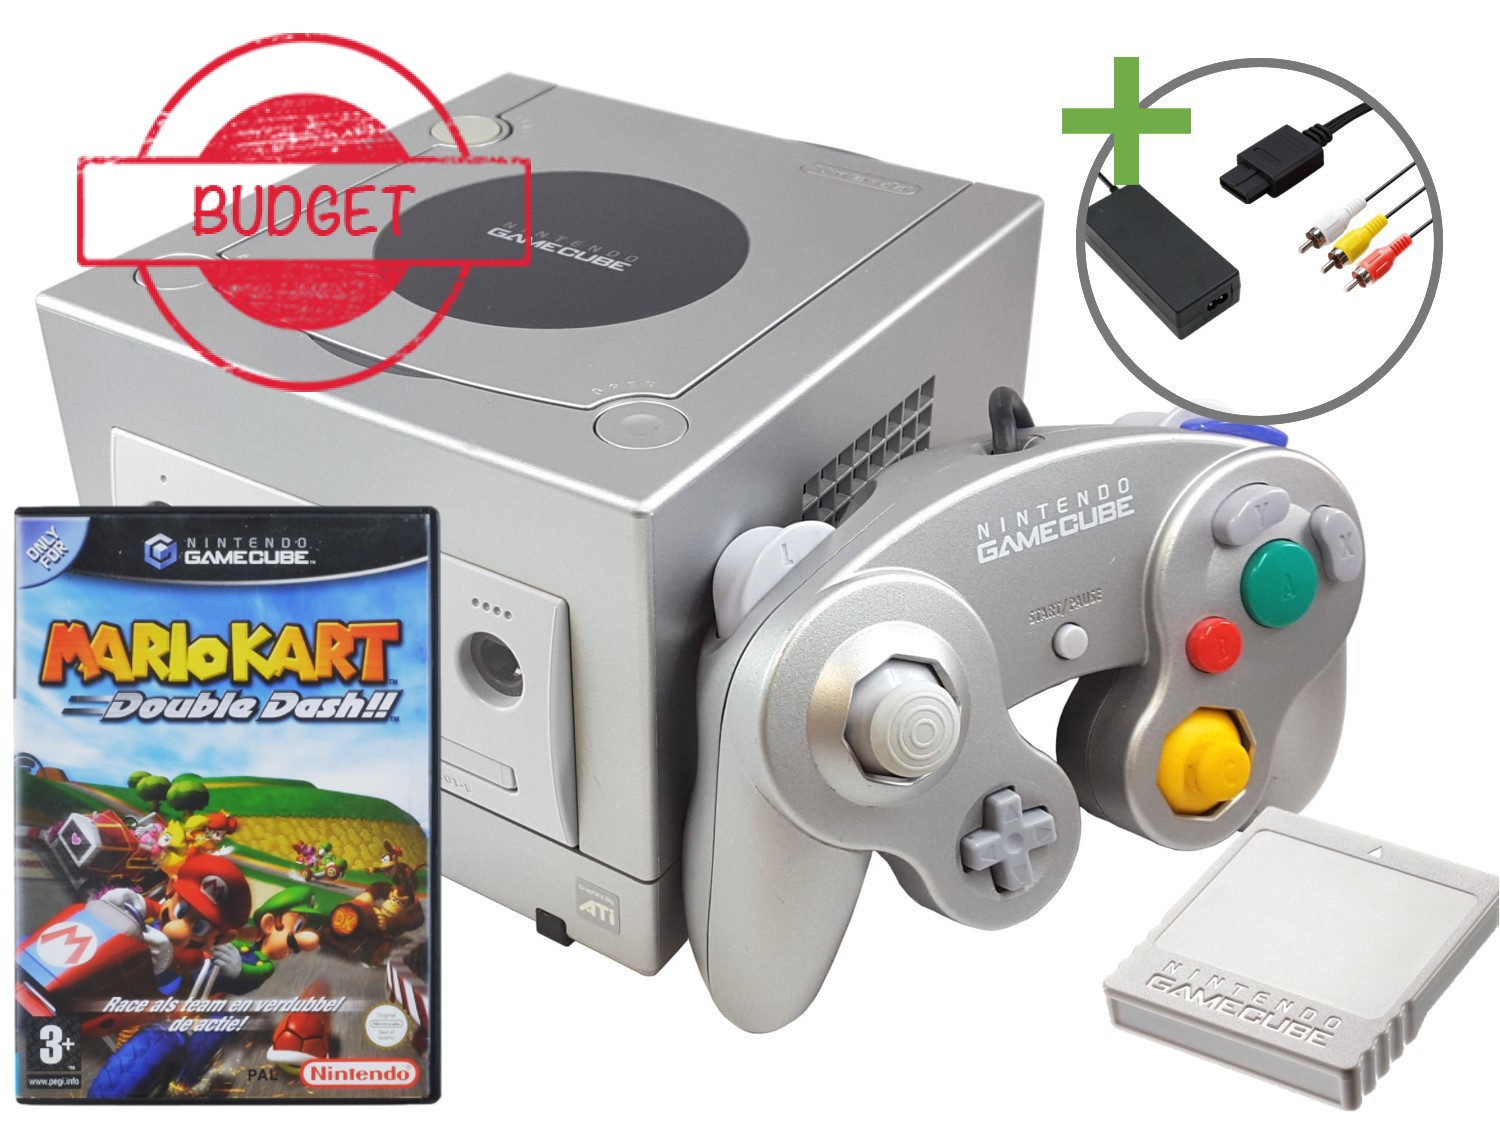 Nintendo Gamecube Starter Pack - Mario Kart Double Dash Edition - Budget - Gamecube Hardware